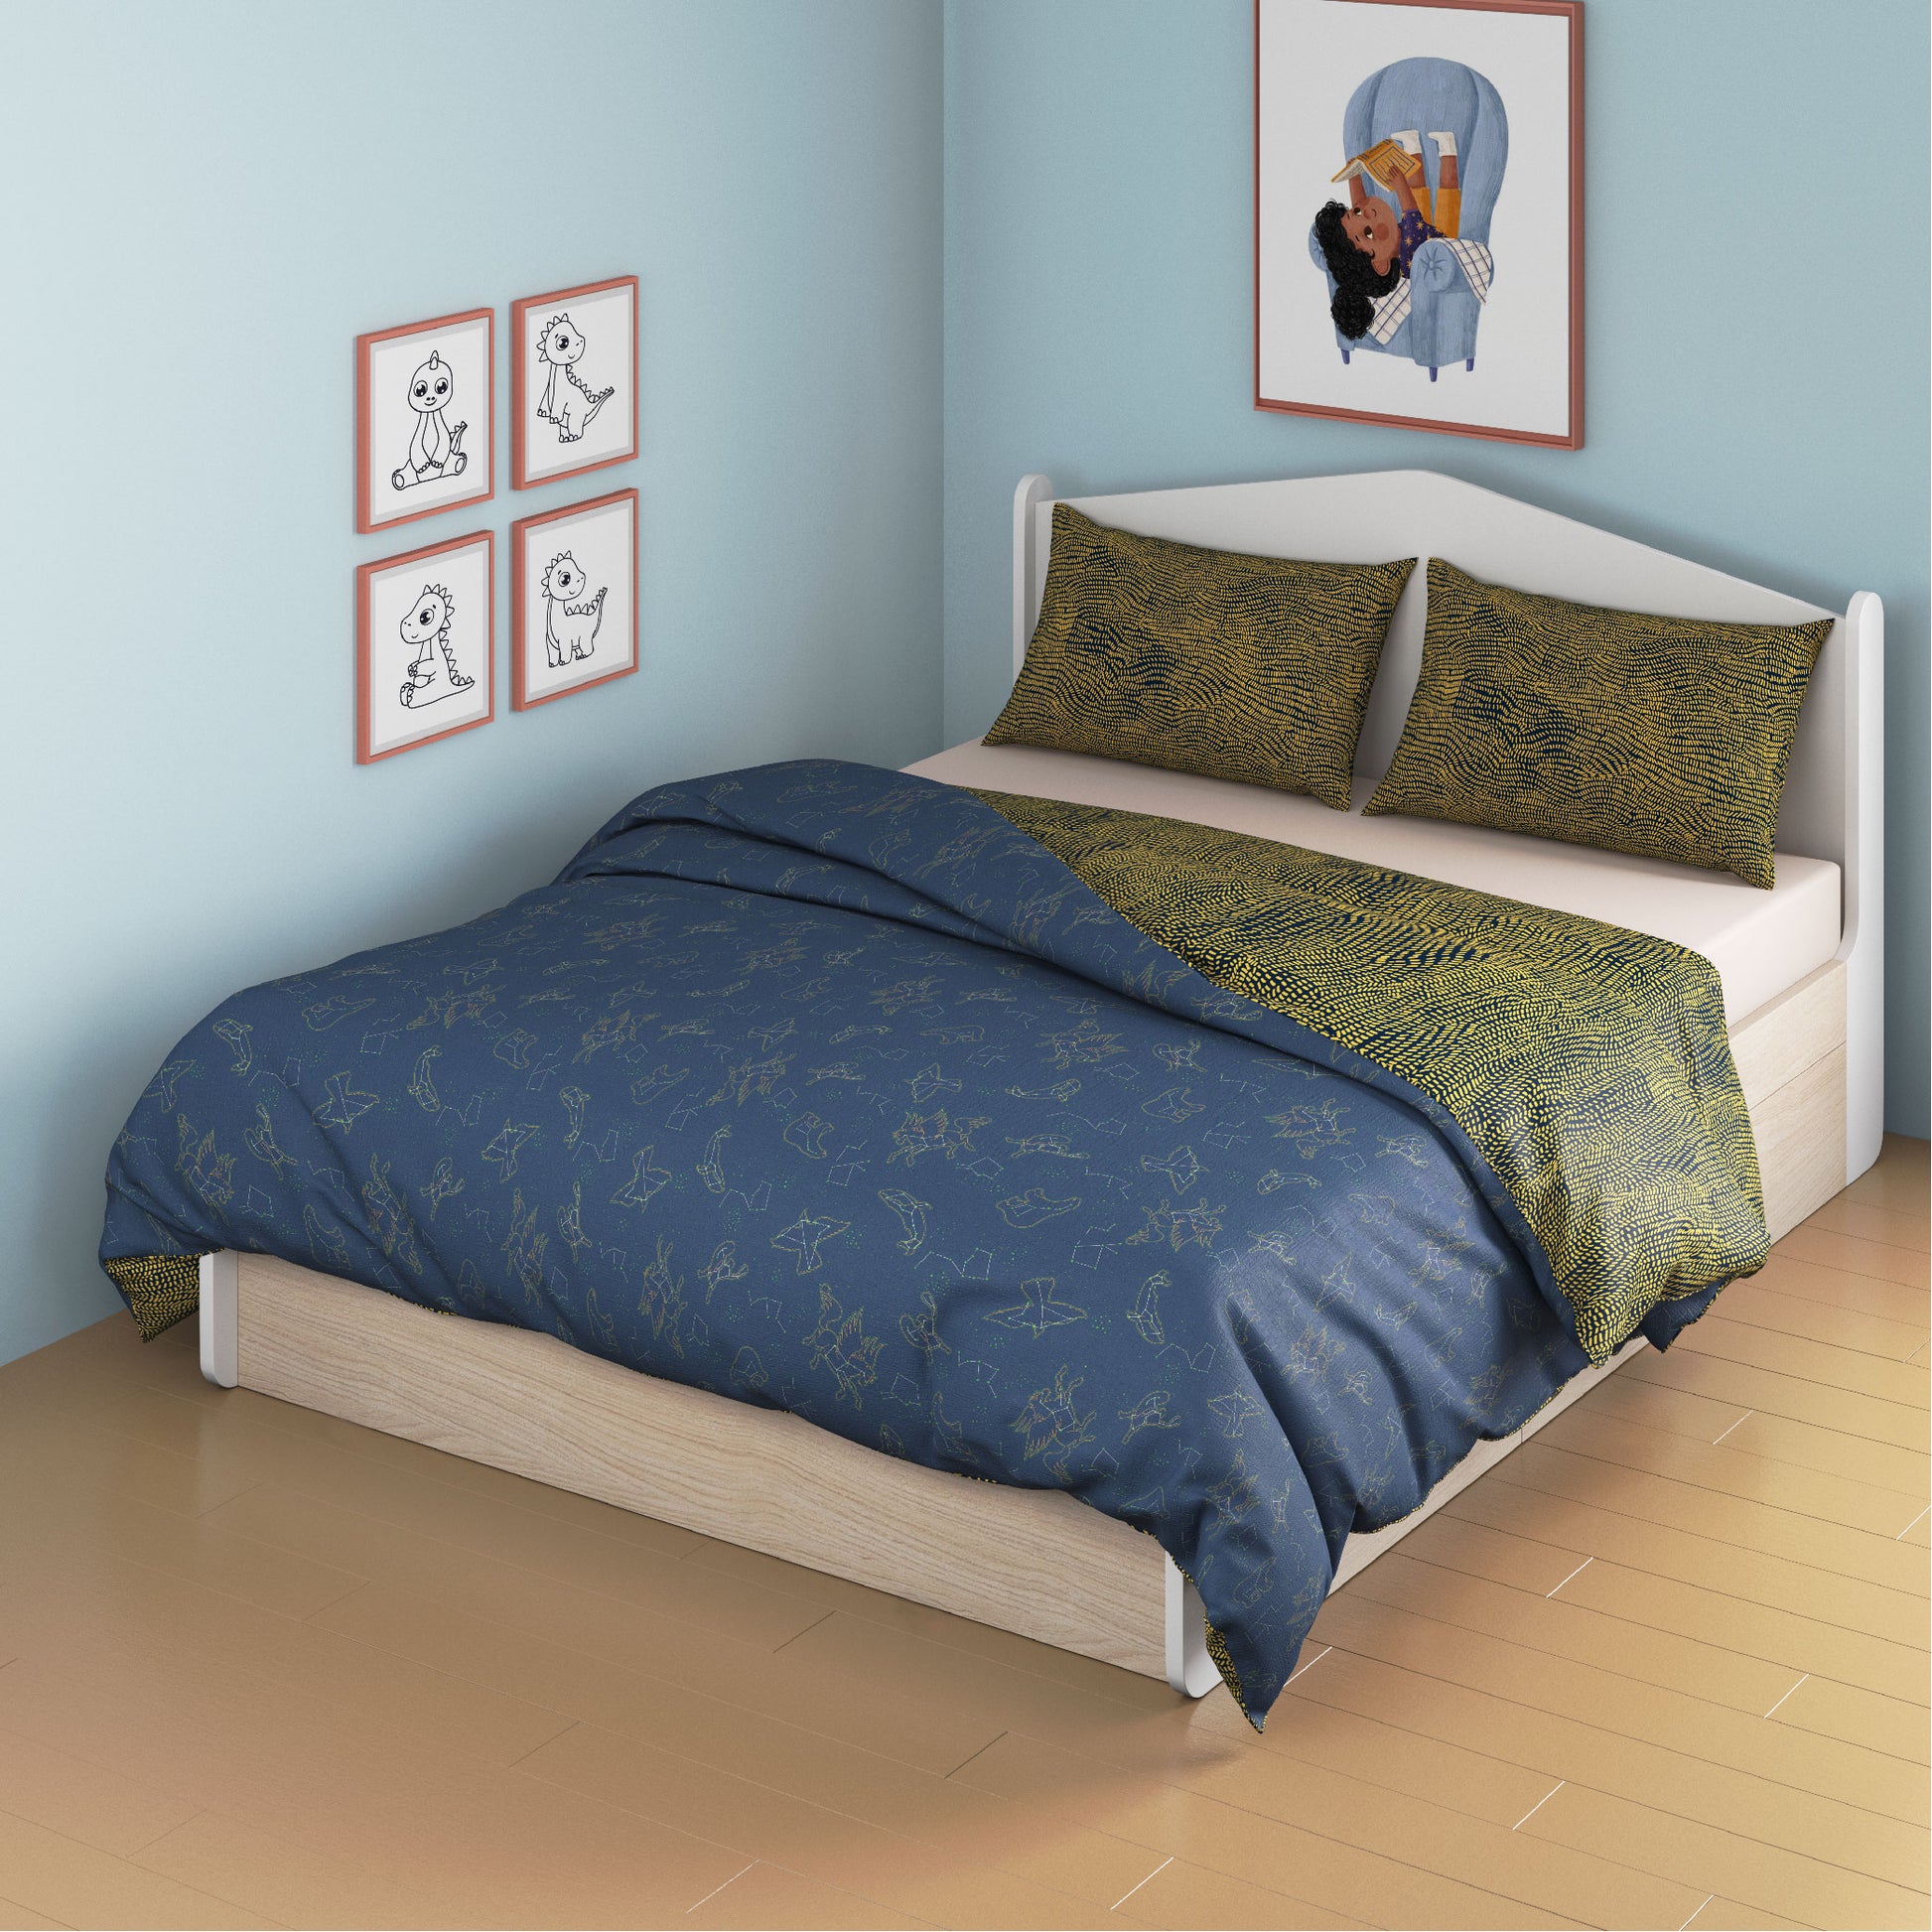 media_gallary Constellation Glow Reversible Winter Comforter Queen Bed Size 1